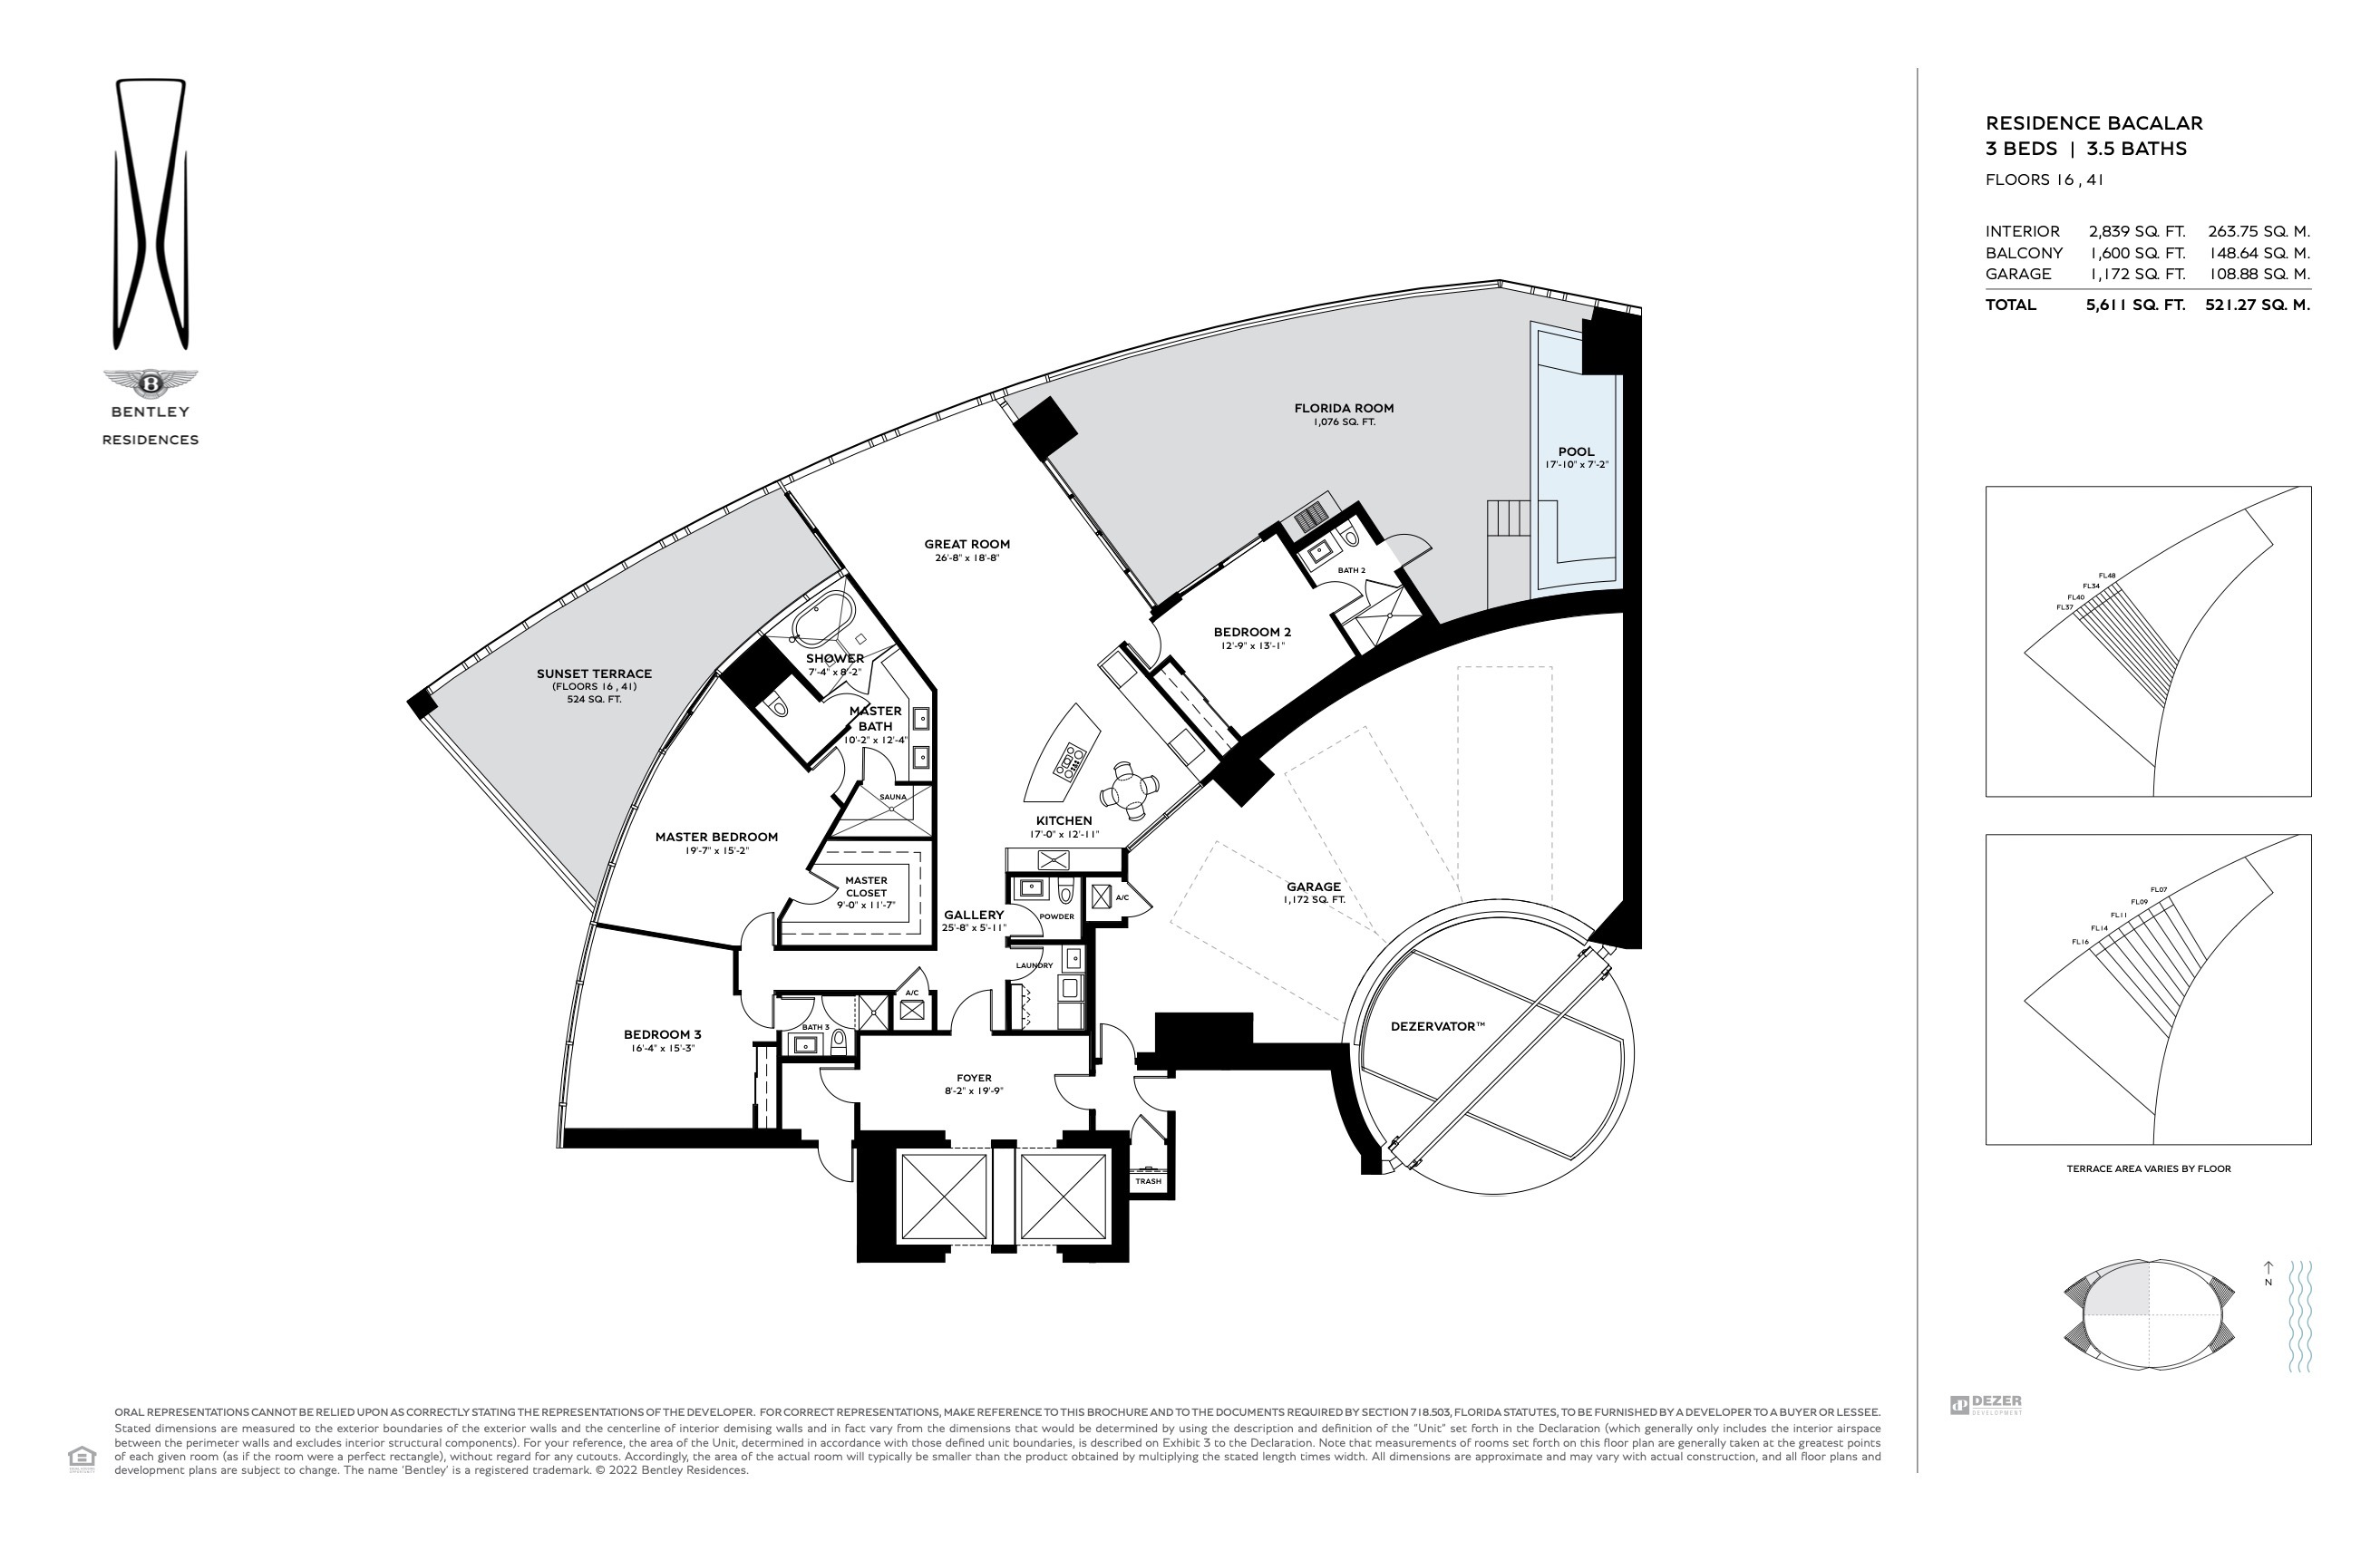 Floor Plan for The Bentley Residences Sunny Isles Floorplans, Residence Bacalar